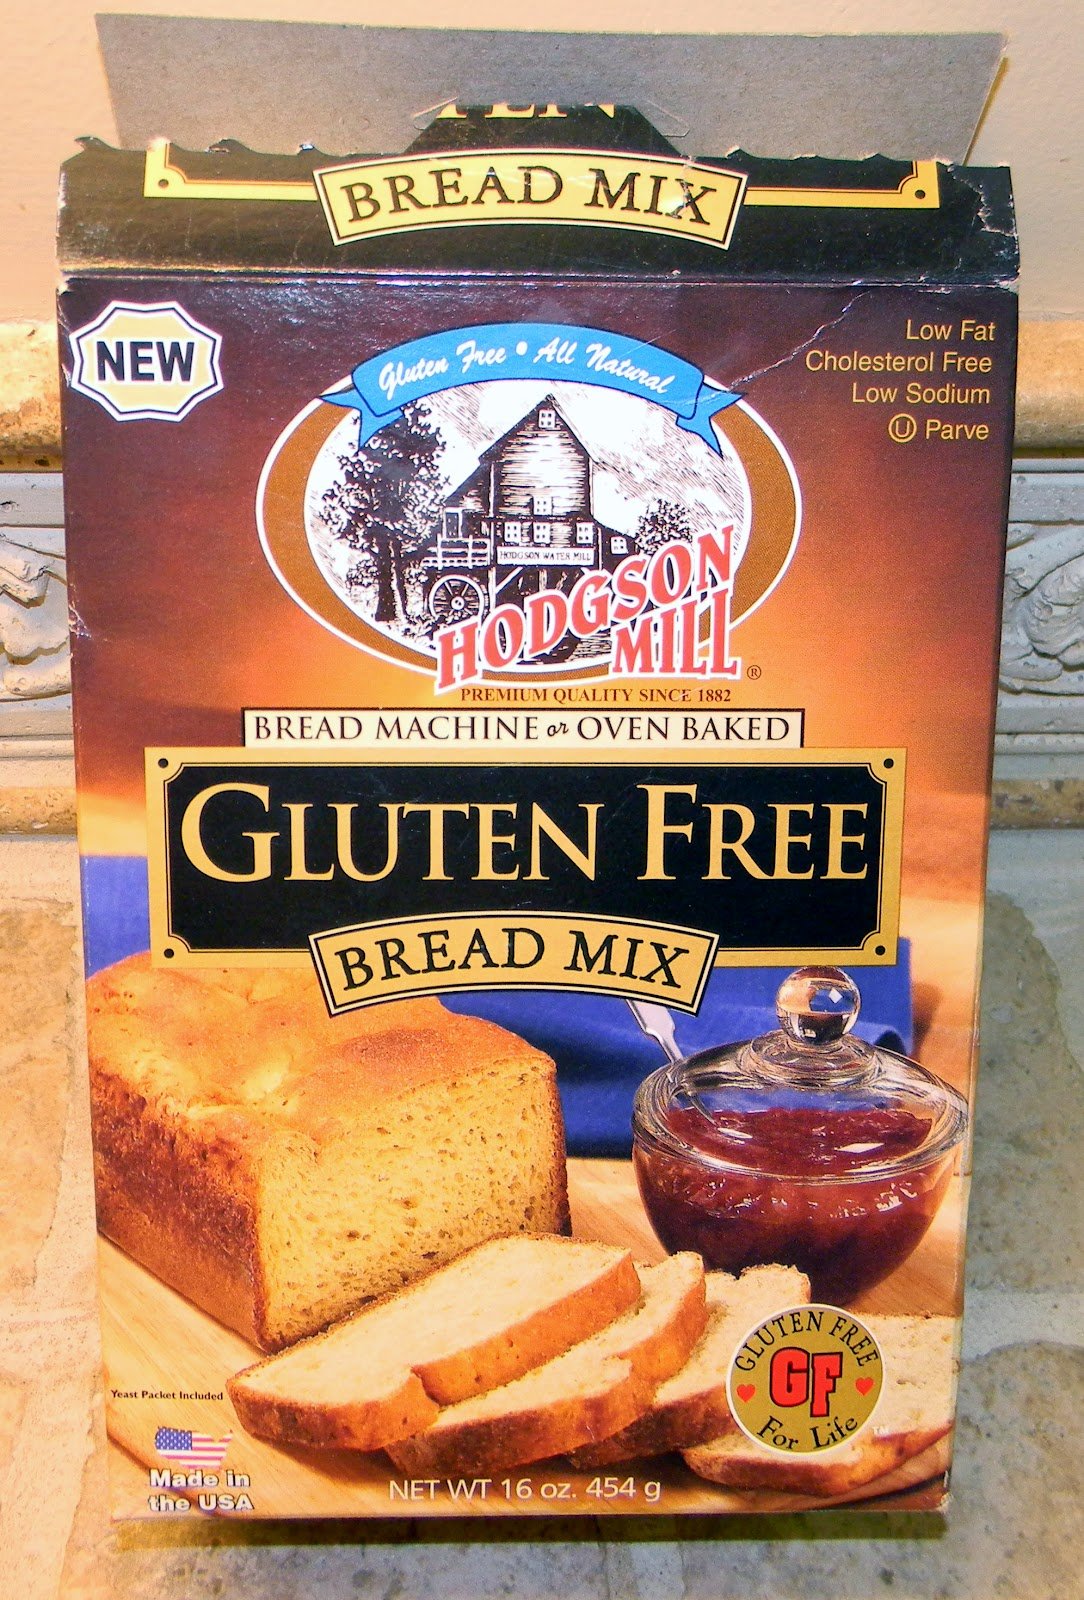 4 U Gluten Free: My First Loaf of Bread in New Bread Machine